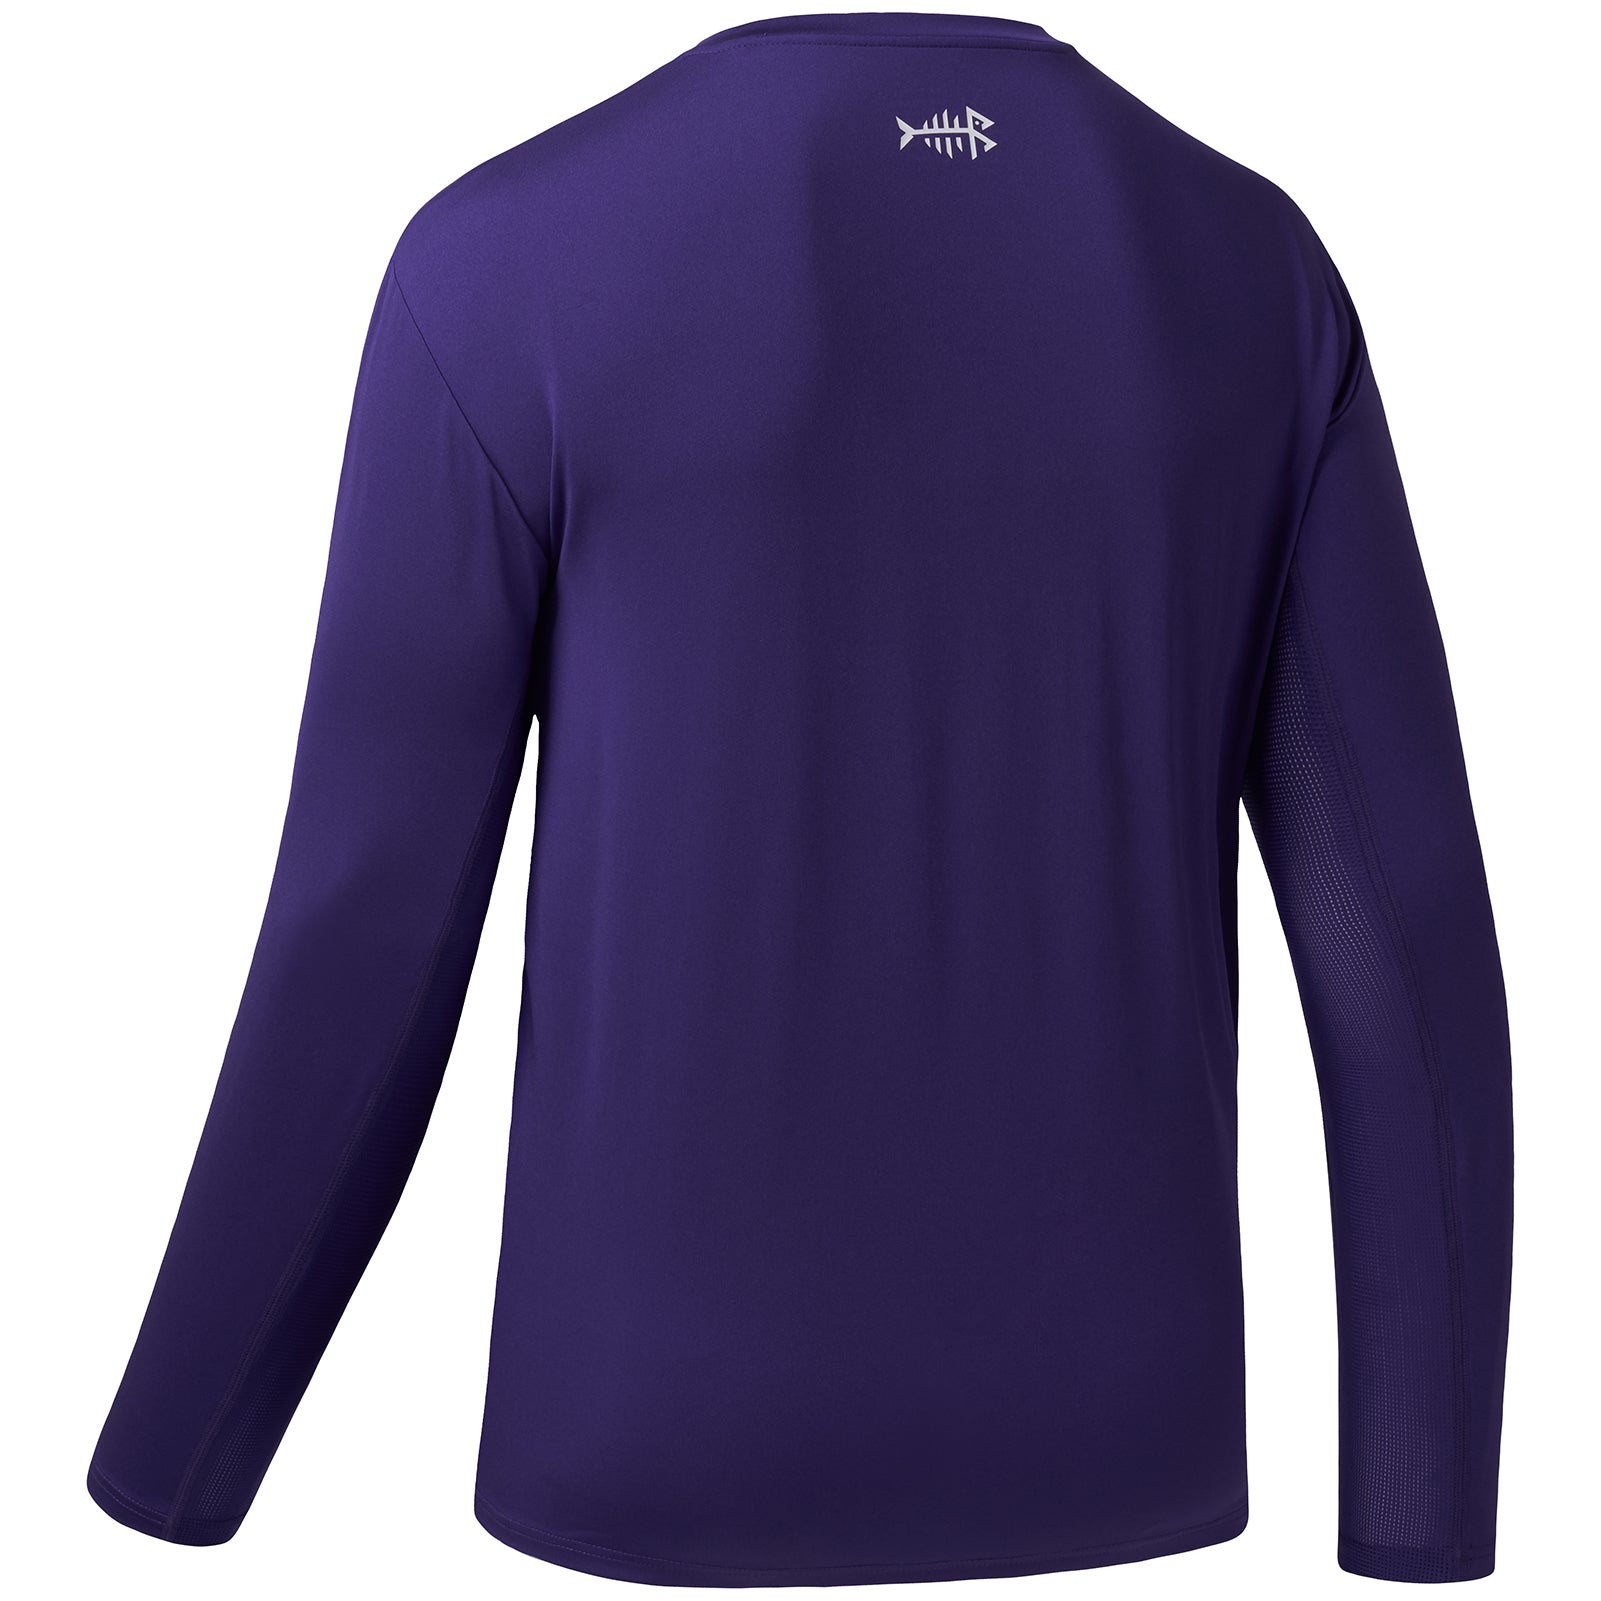 Buy BASSDASH Fishing T Shirts for Men UV Sun Protection UPF 50+ Long Sleeve  Tee T-Shirt Online at desertcartINDIA